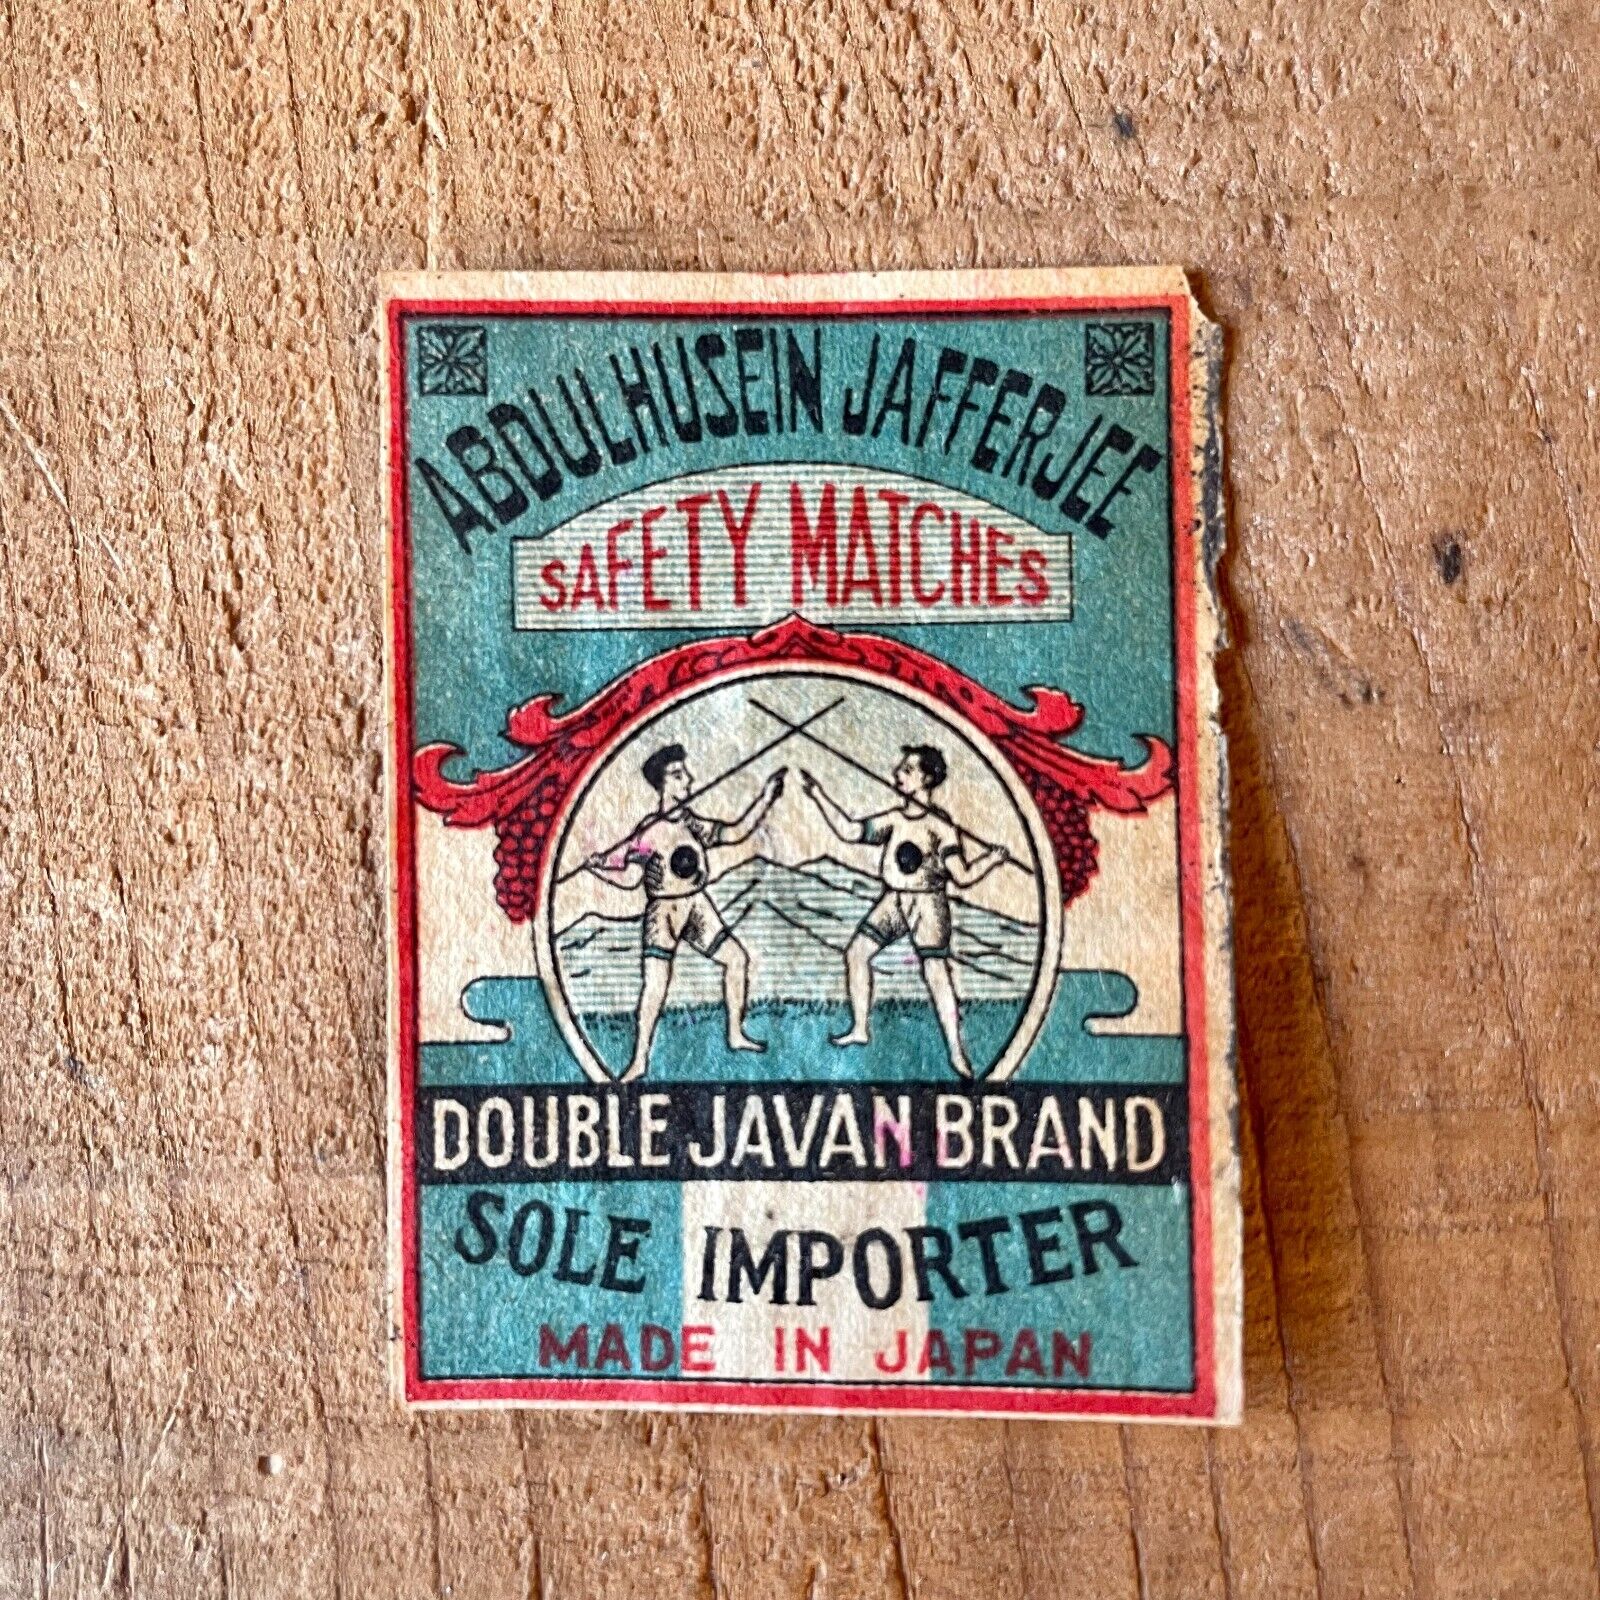 Old matchbox label abdulhusein jafferjee made in Japan antique stamp art A20